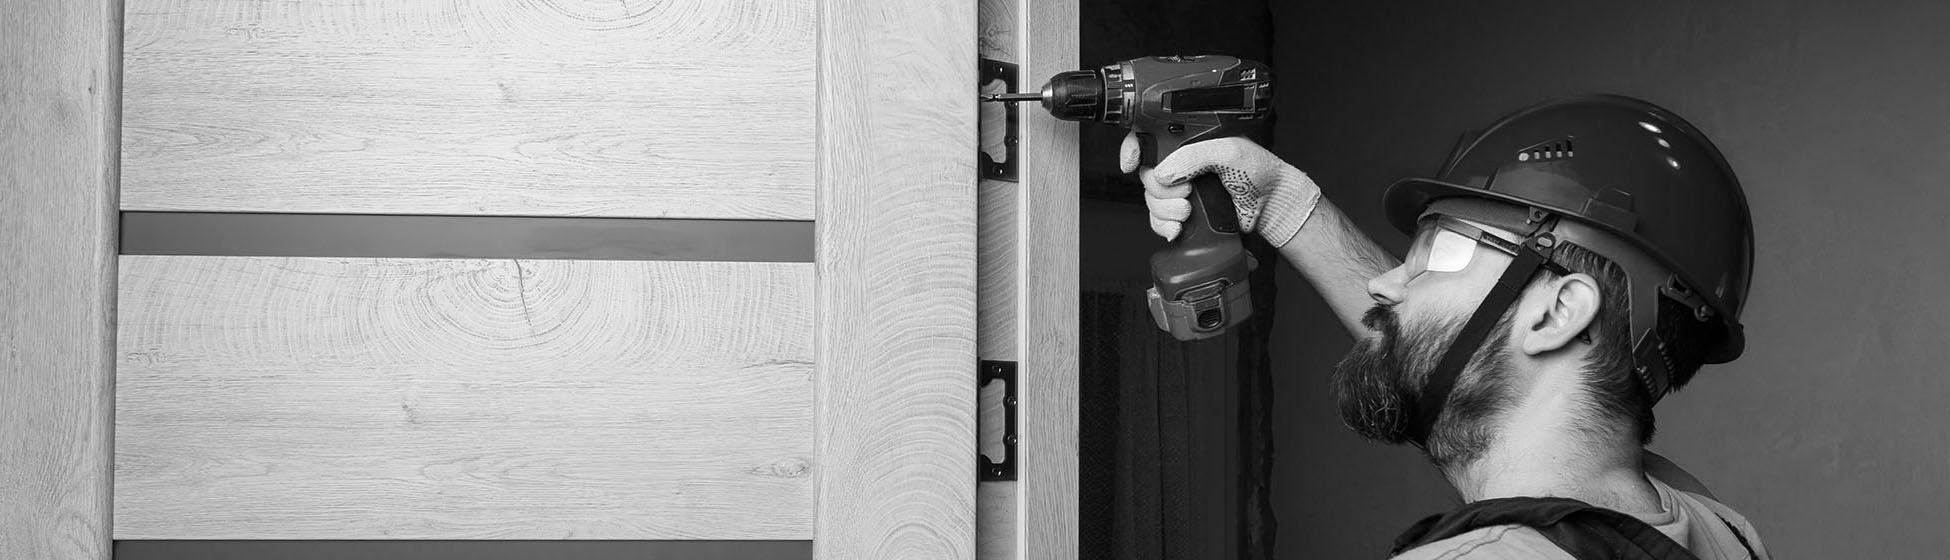 Reparer bas de porte en bois pourri